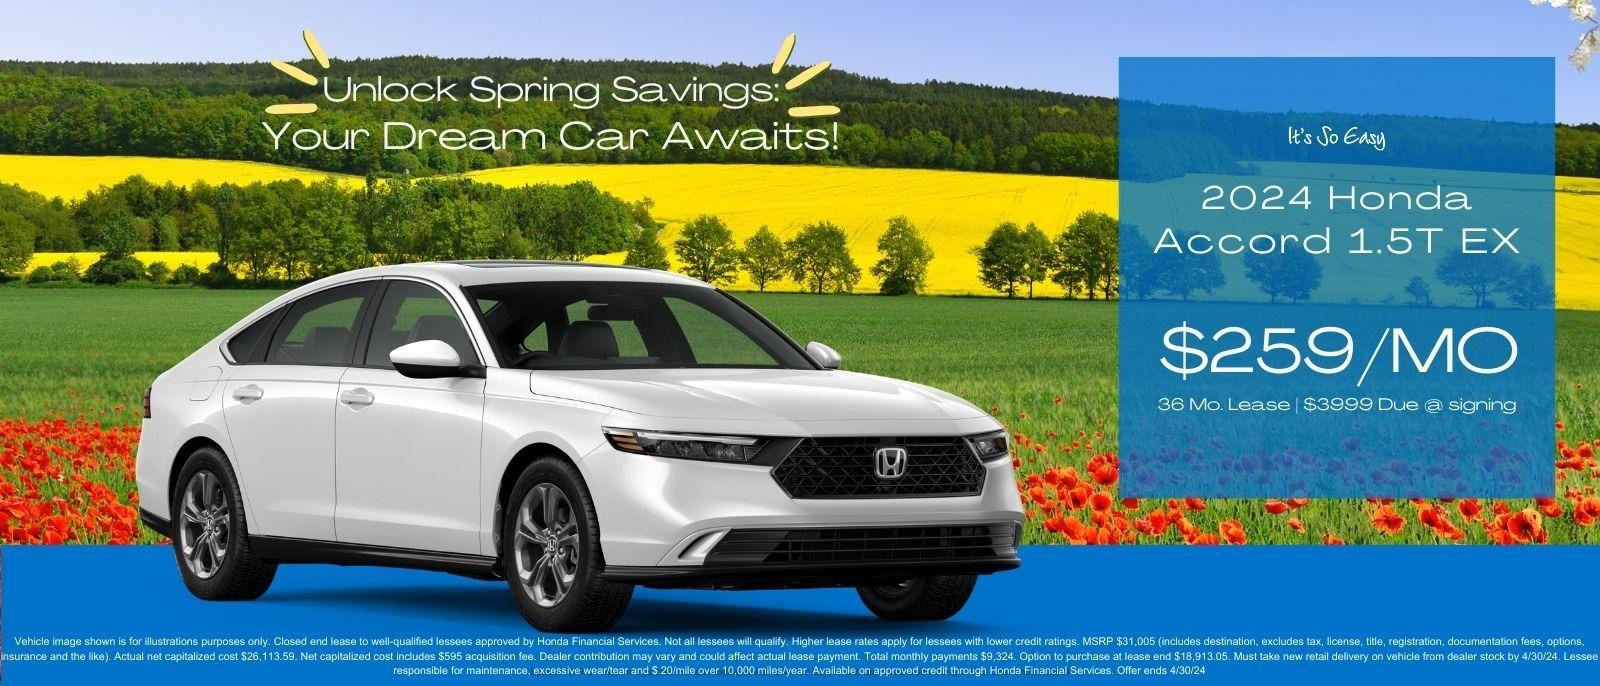 Unlock Spring Savings: Your Dream Car Awaits!

2024 Honda Accord 1.5T EX
$259/MO 36 mo lease | $3999 Due @ Signing